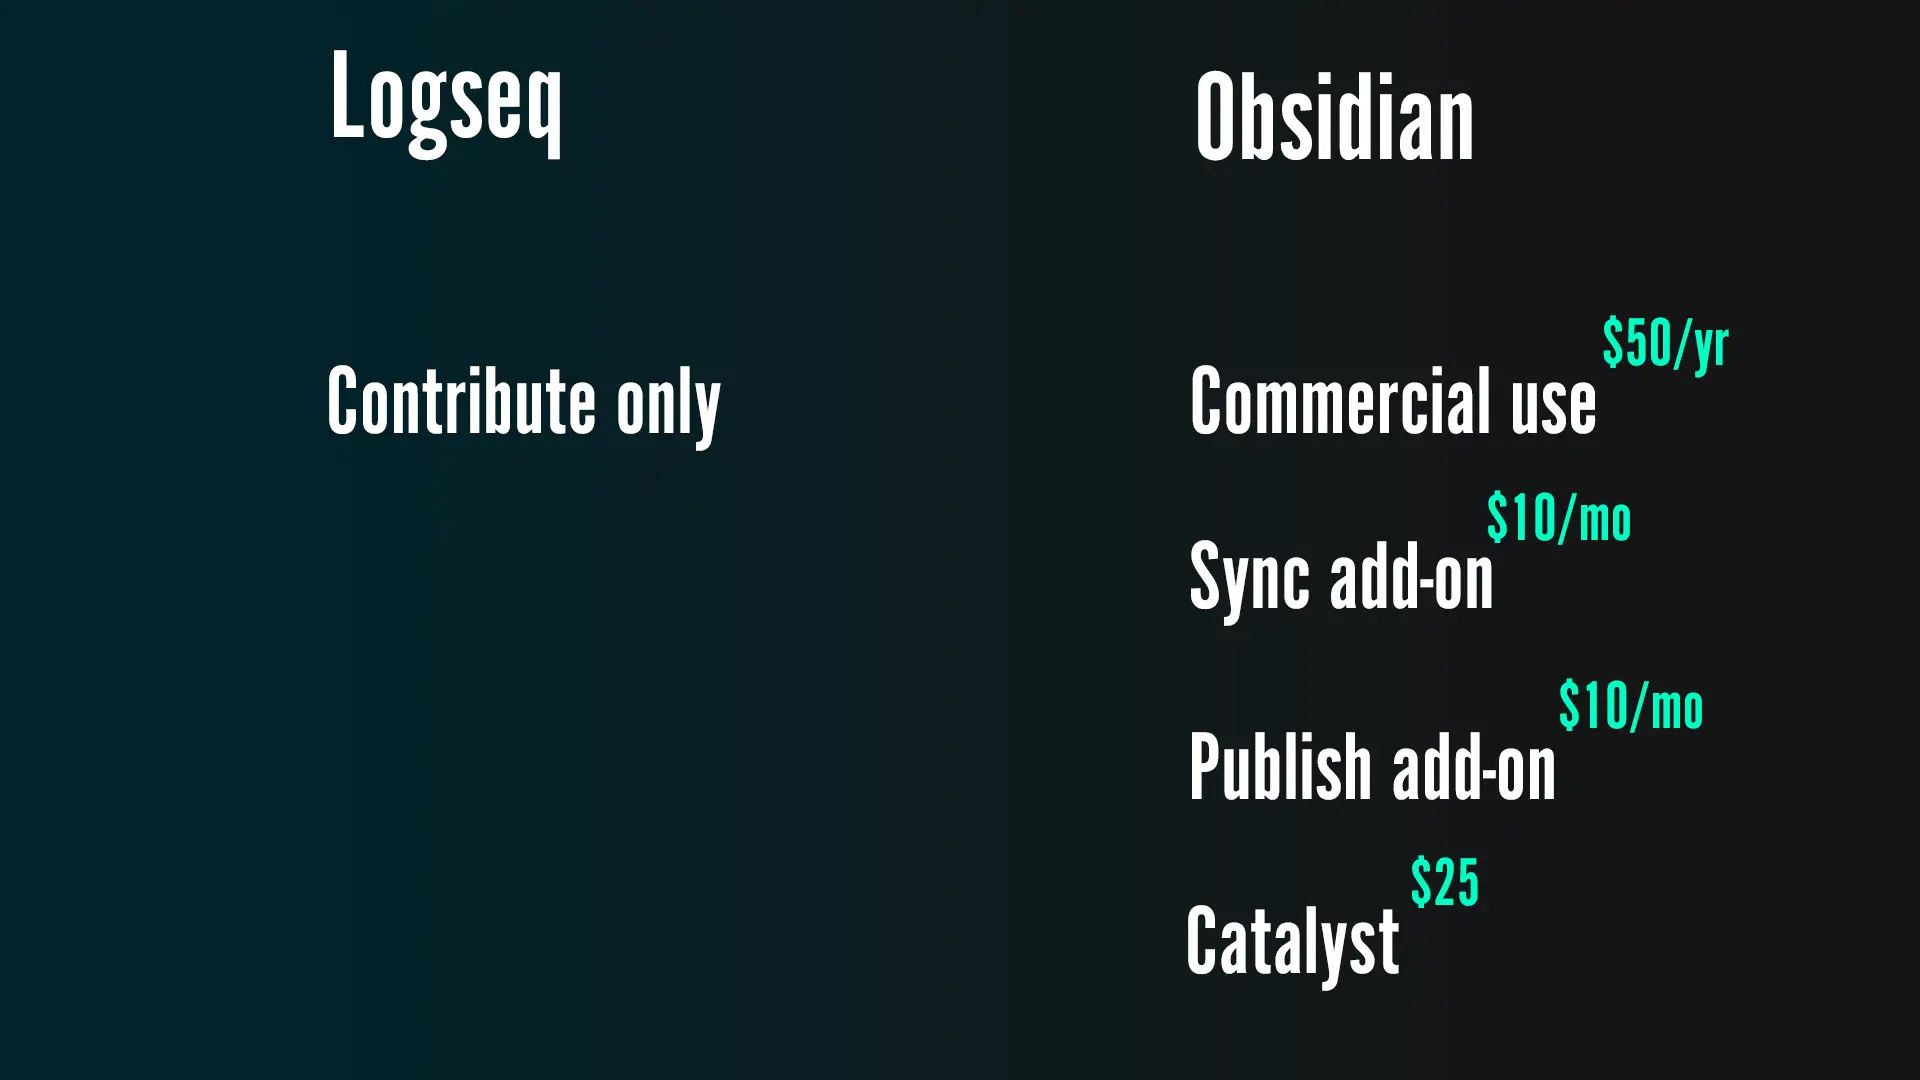 Logseq vs Obsidian